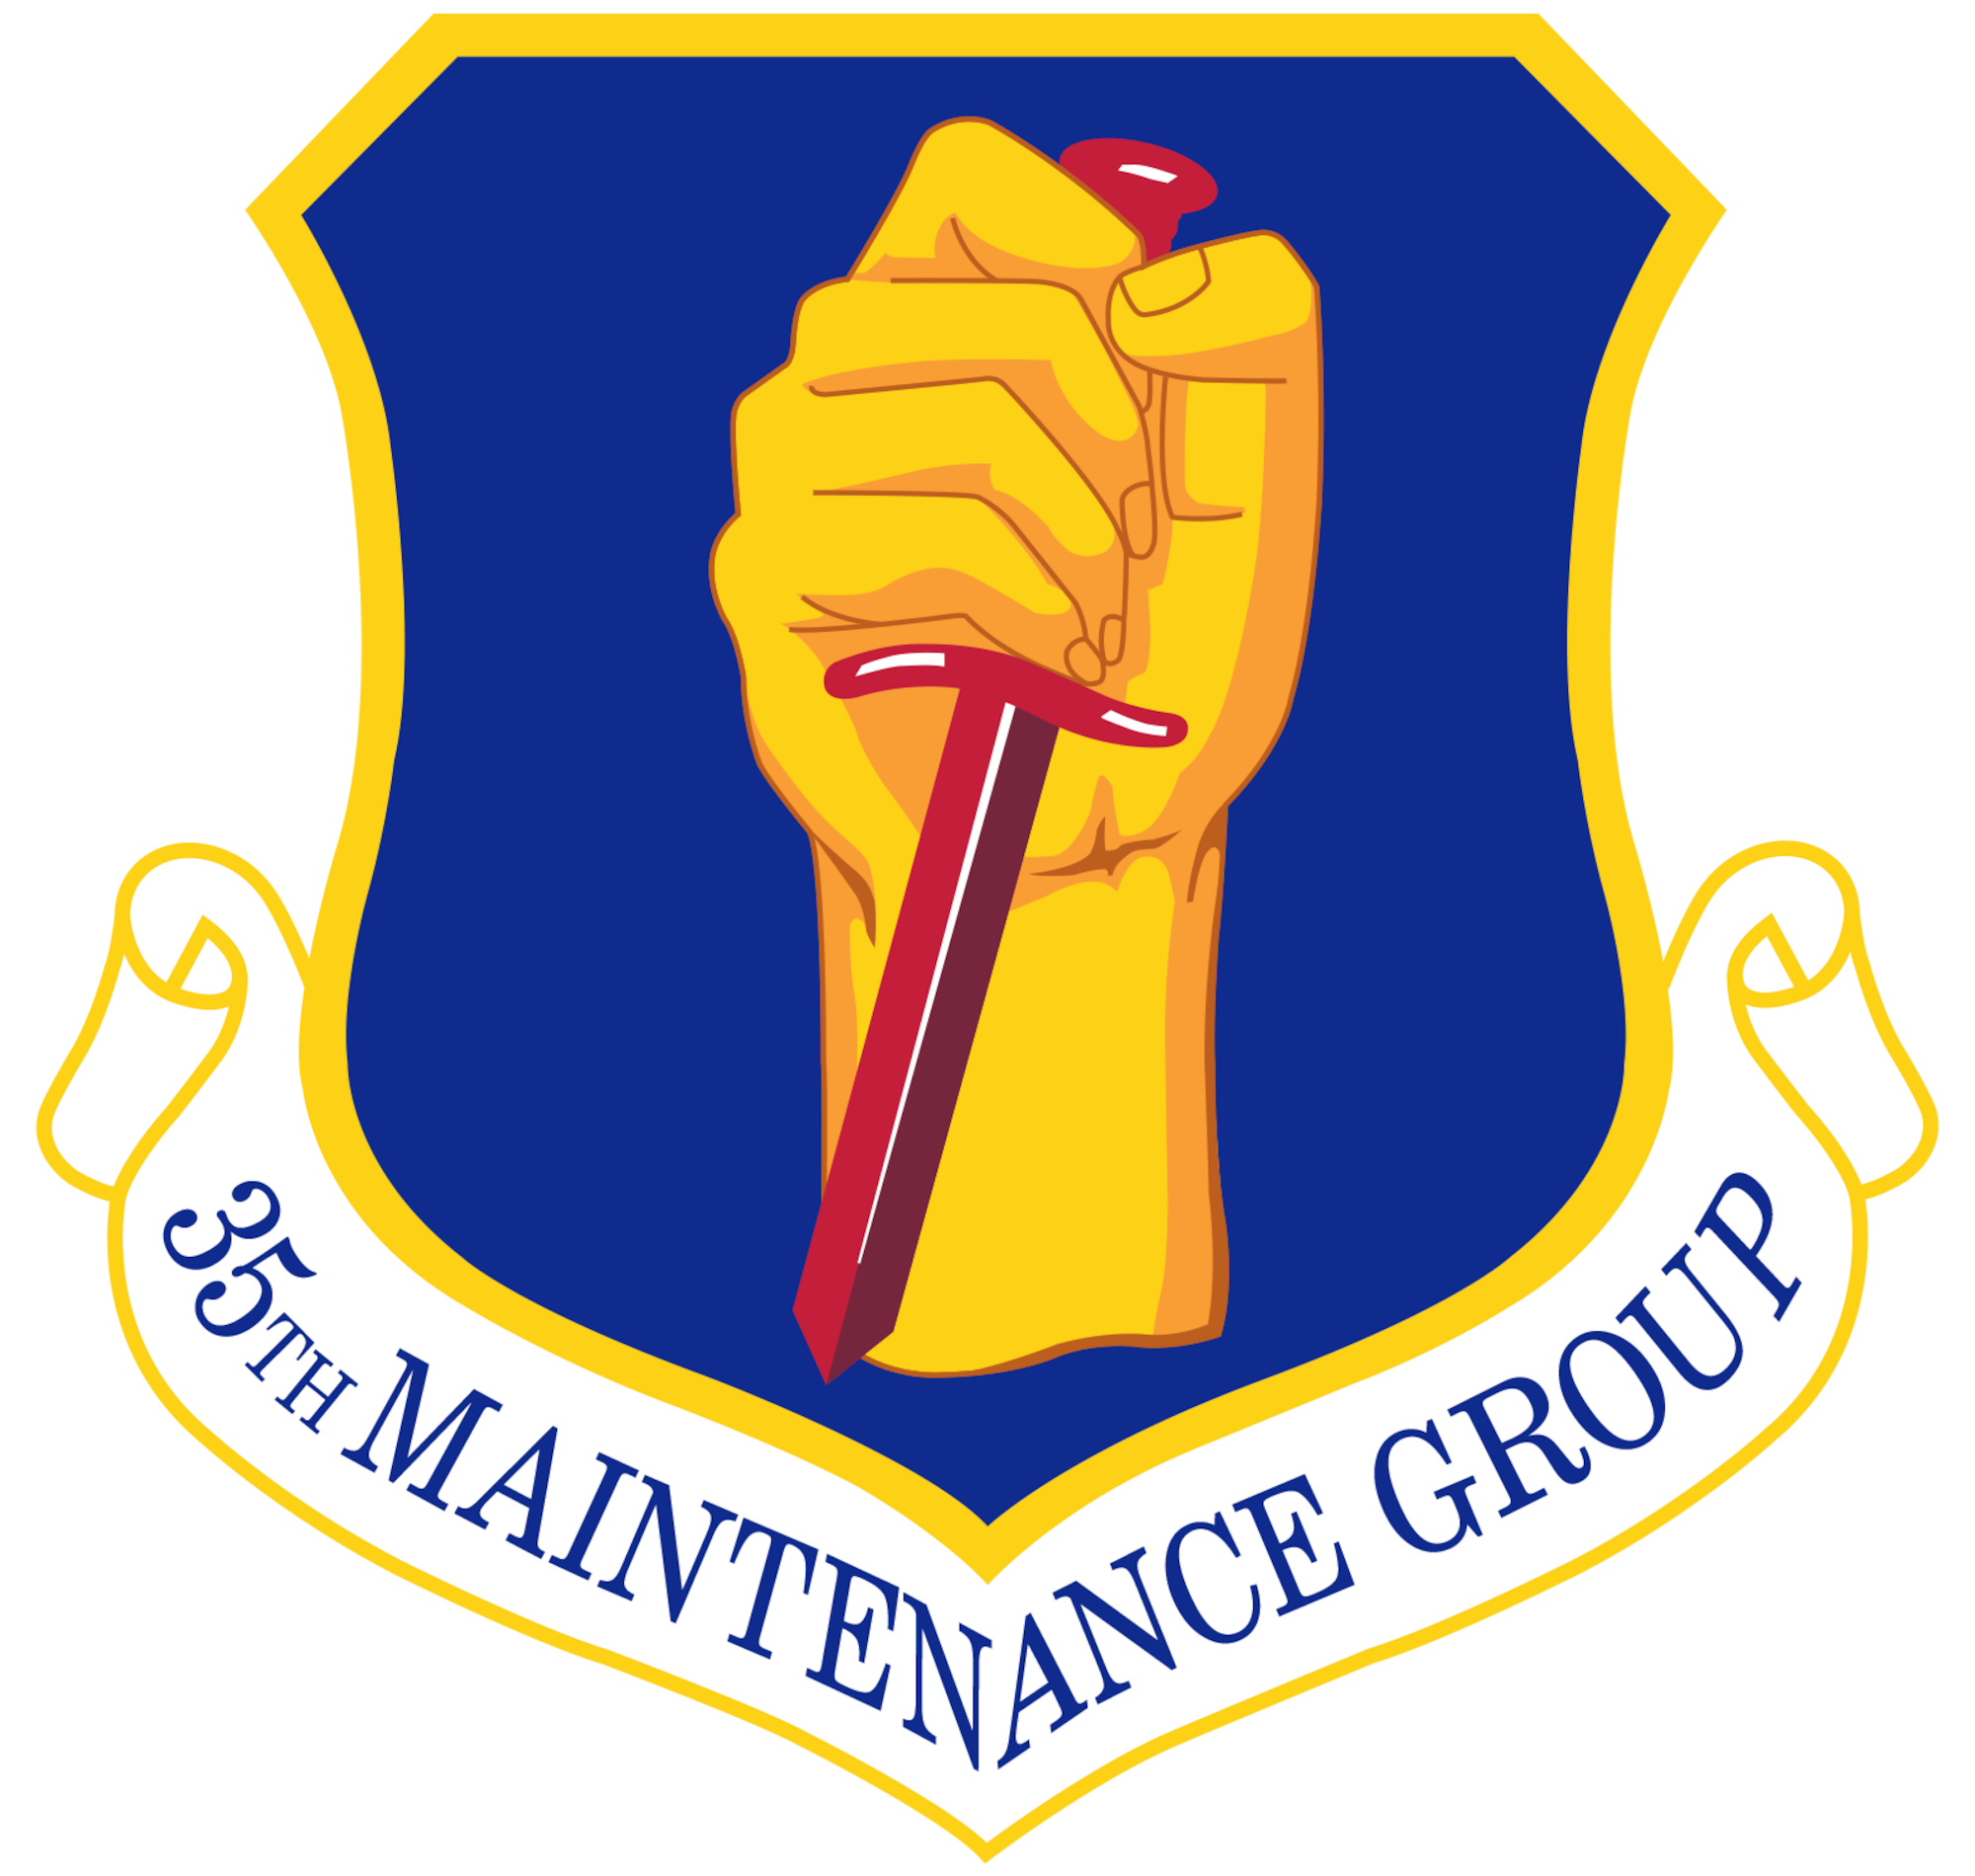 35th Maintenance Group